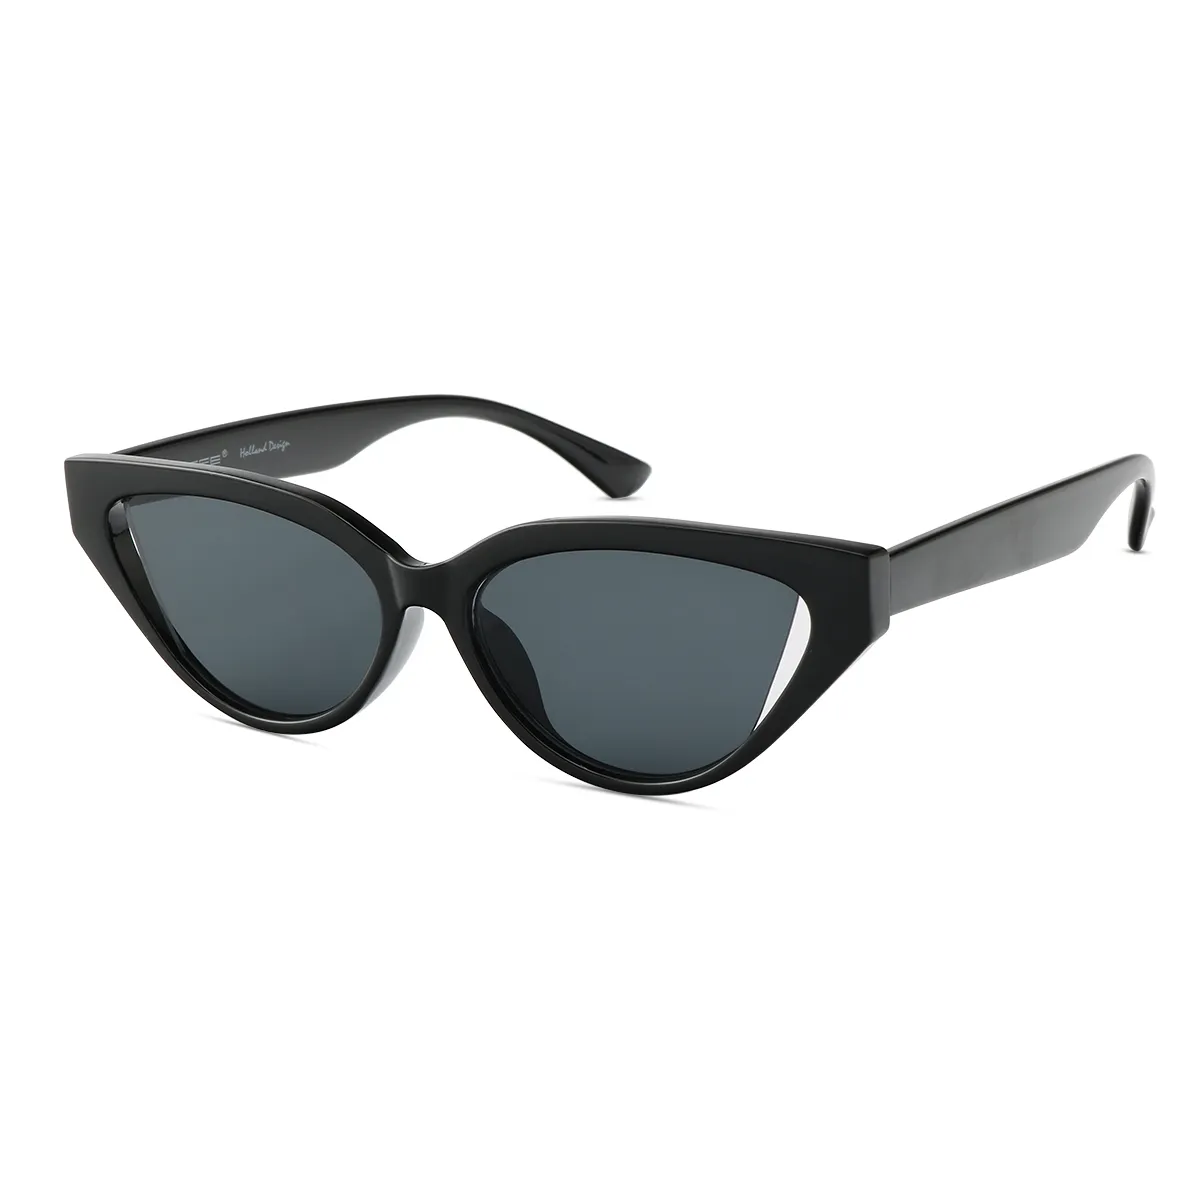 Fashion Cat-eye Black Sunglasses for Women